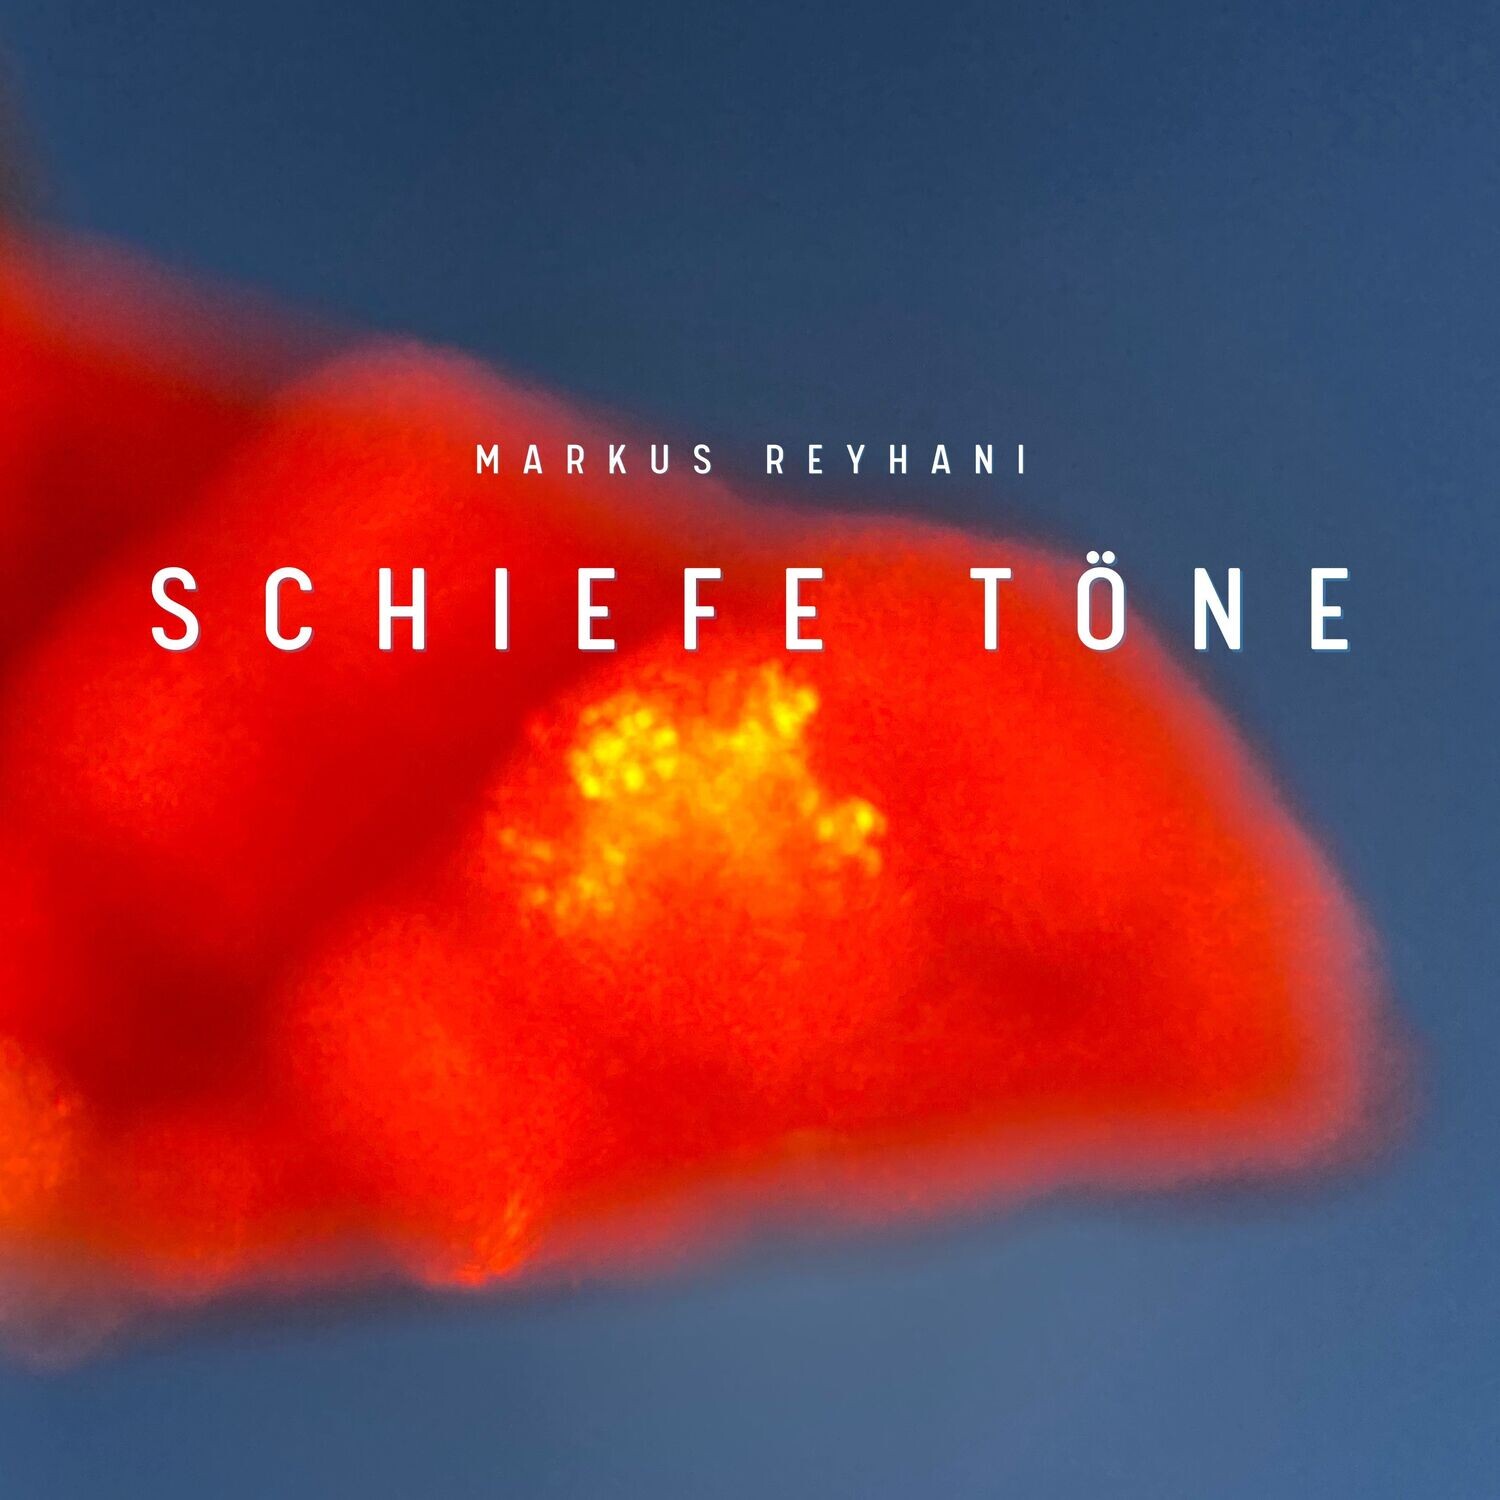 Schiefe Töne (MP3 Album)